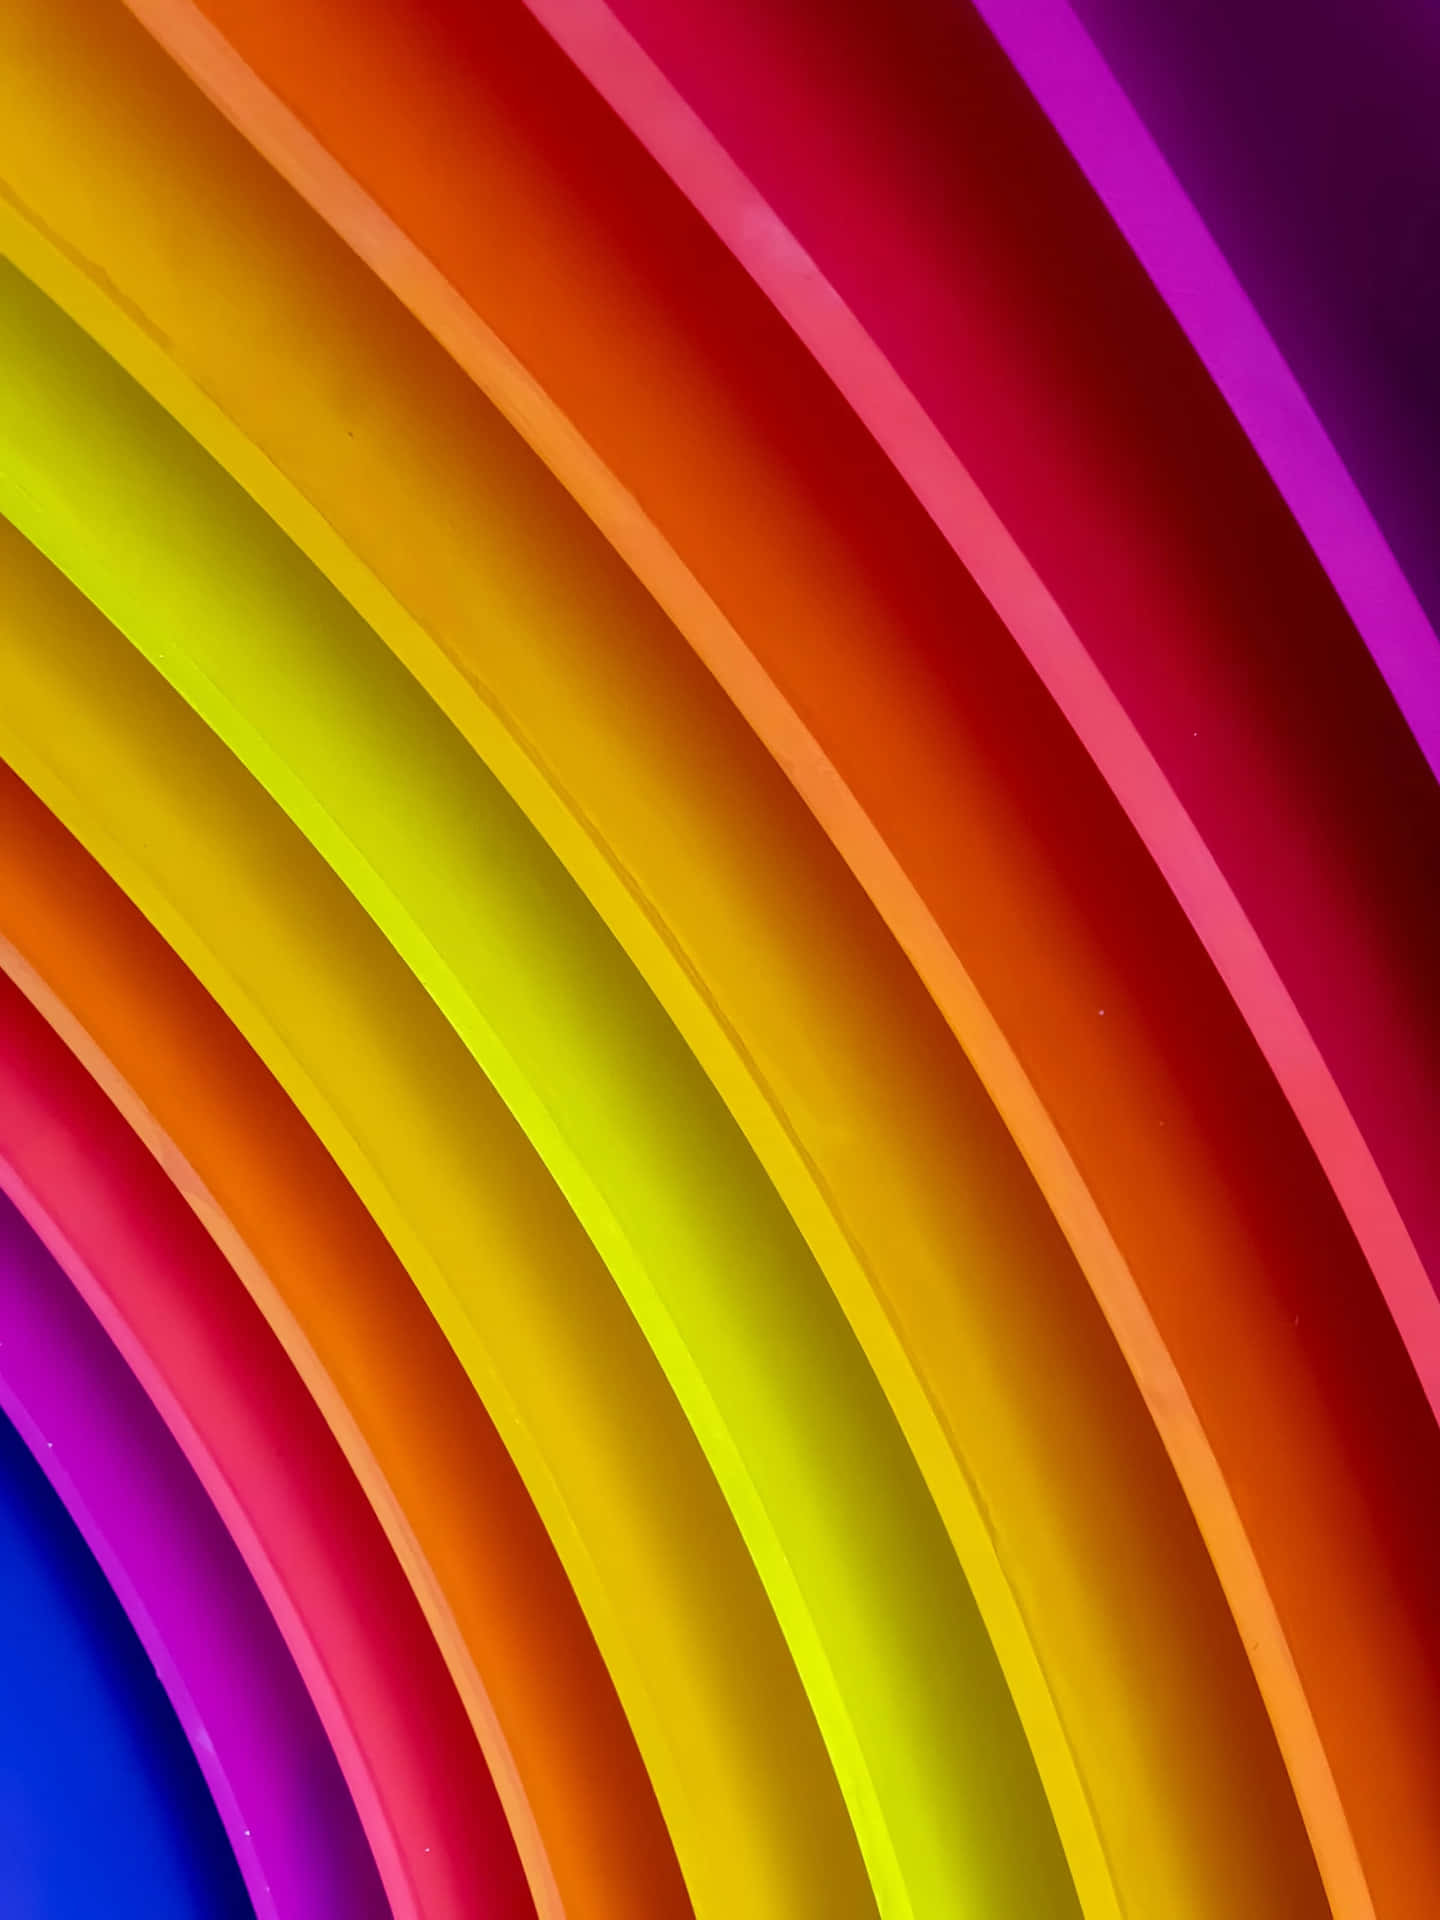 Vibrant Neon Rainbow Waves Wallpaper